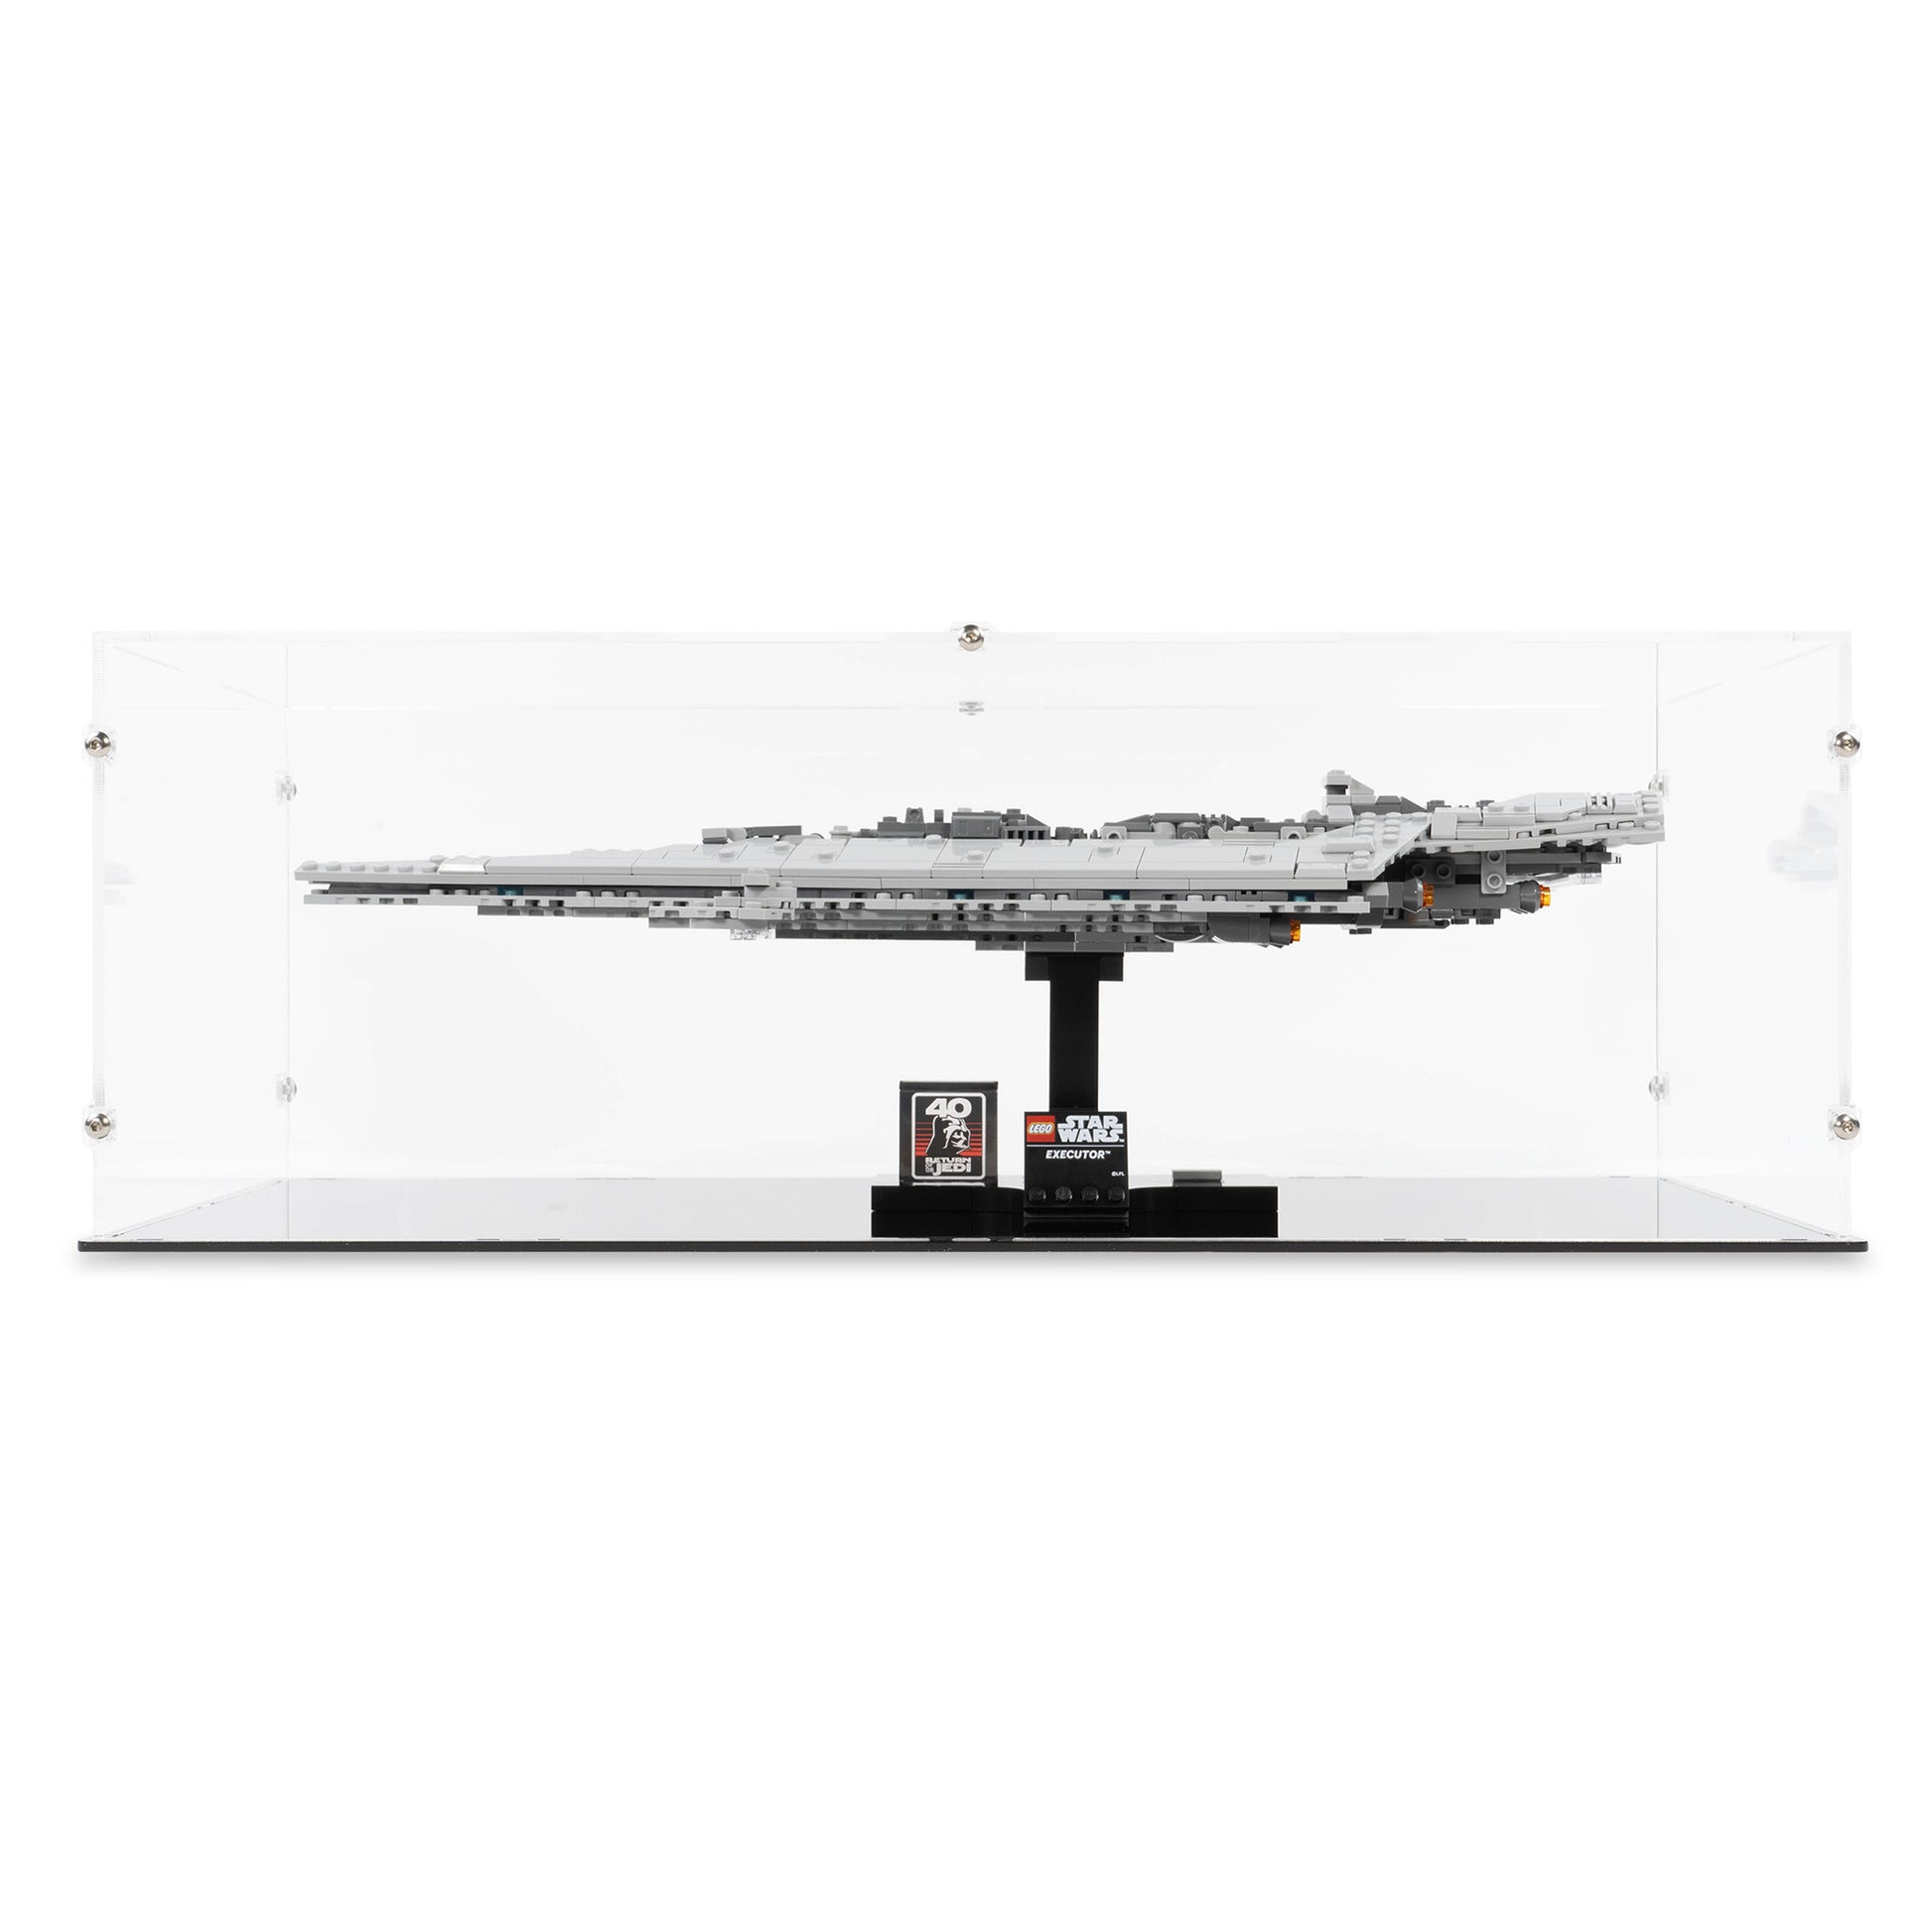 LEGO 75356 Executor Super Star Destroyer™